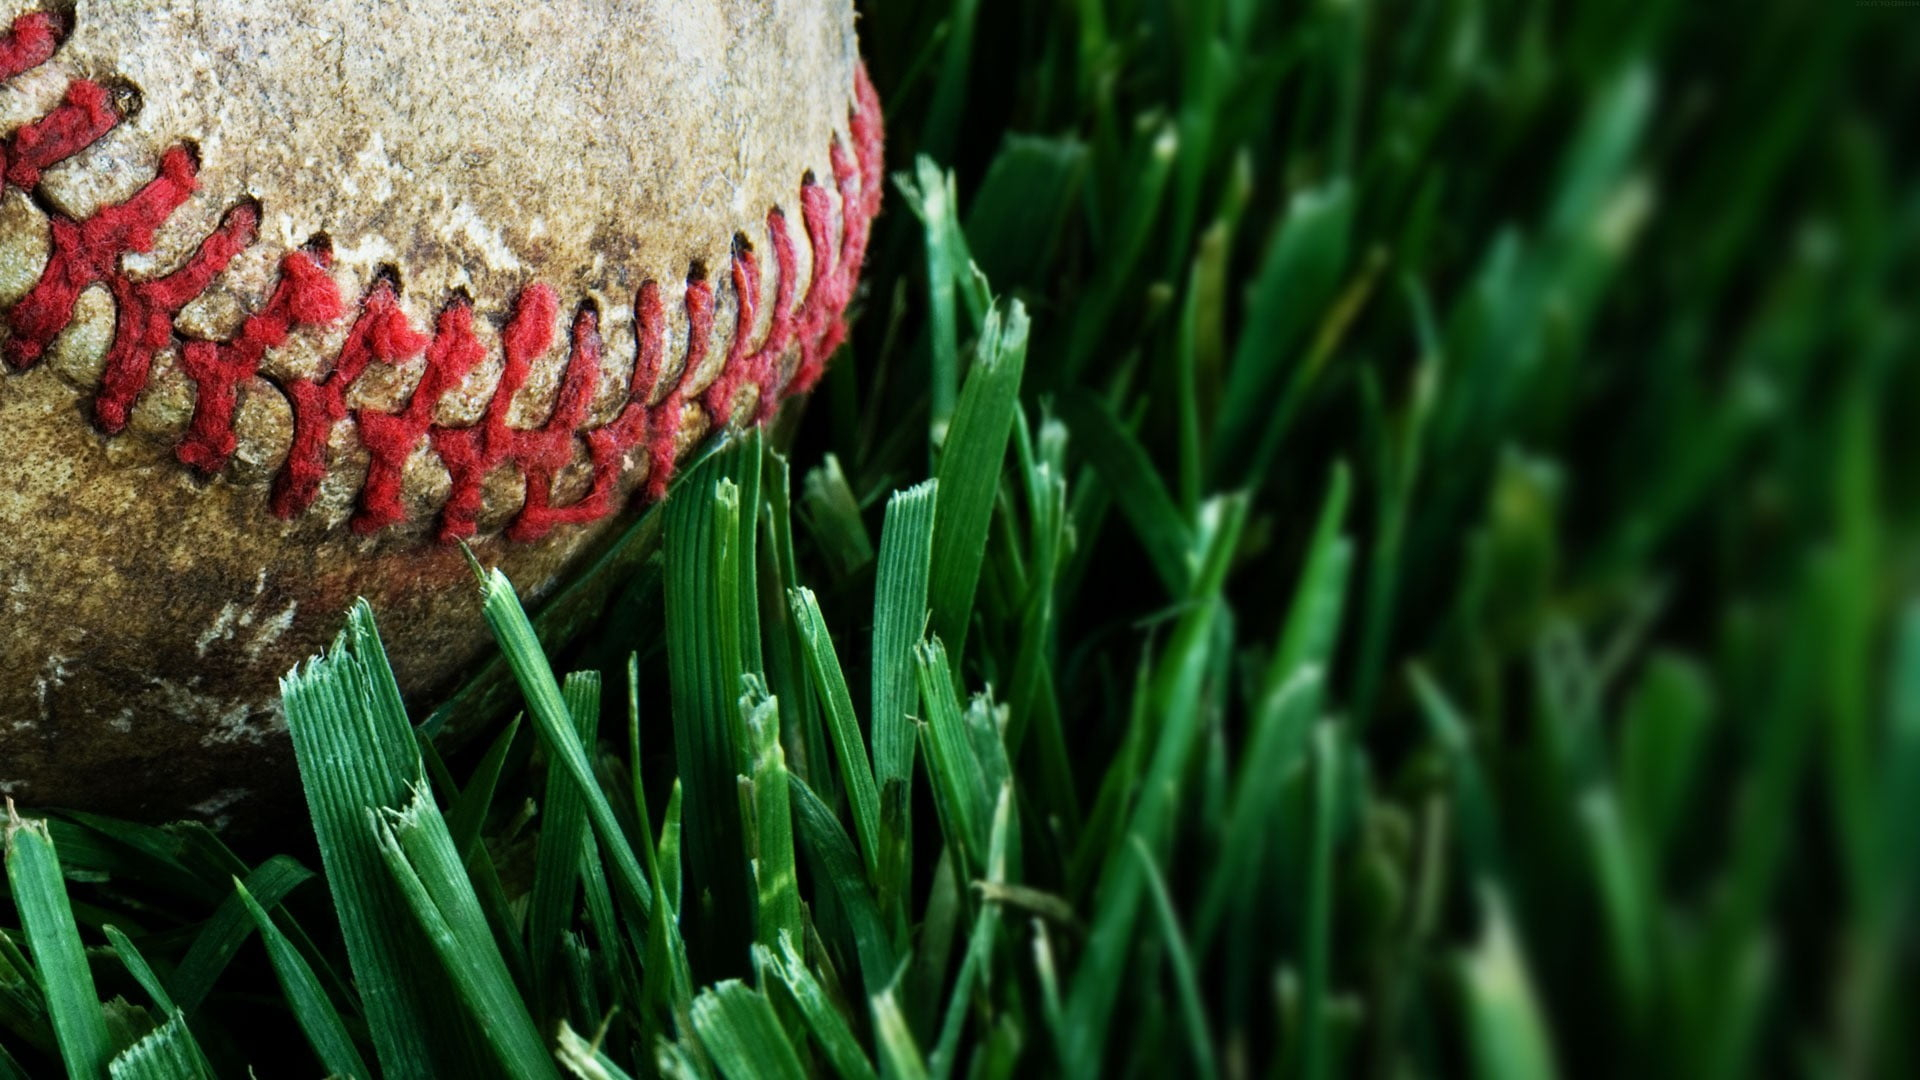 White baseball wallpaper, macro, grass, balls, green color, growth, close-up